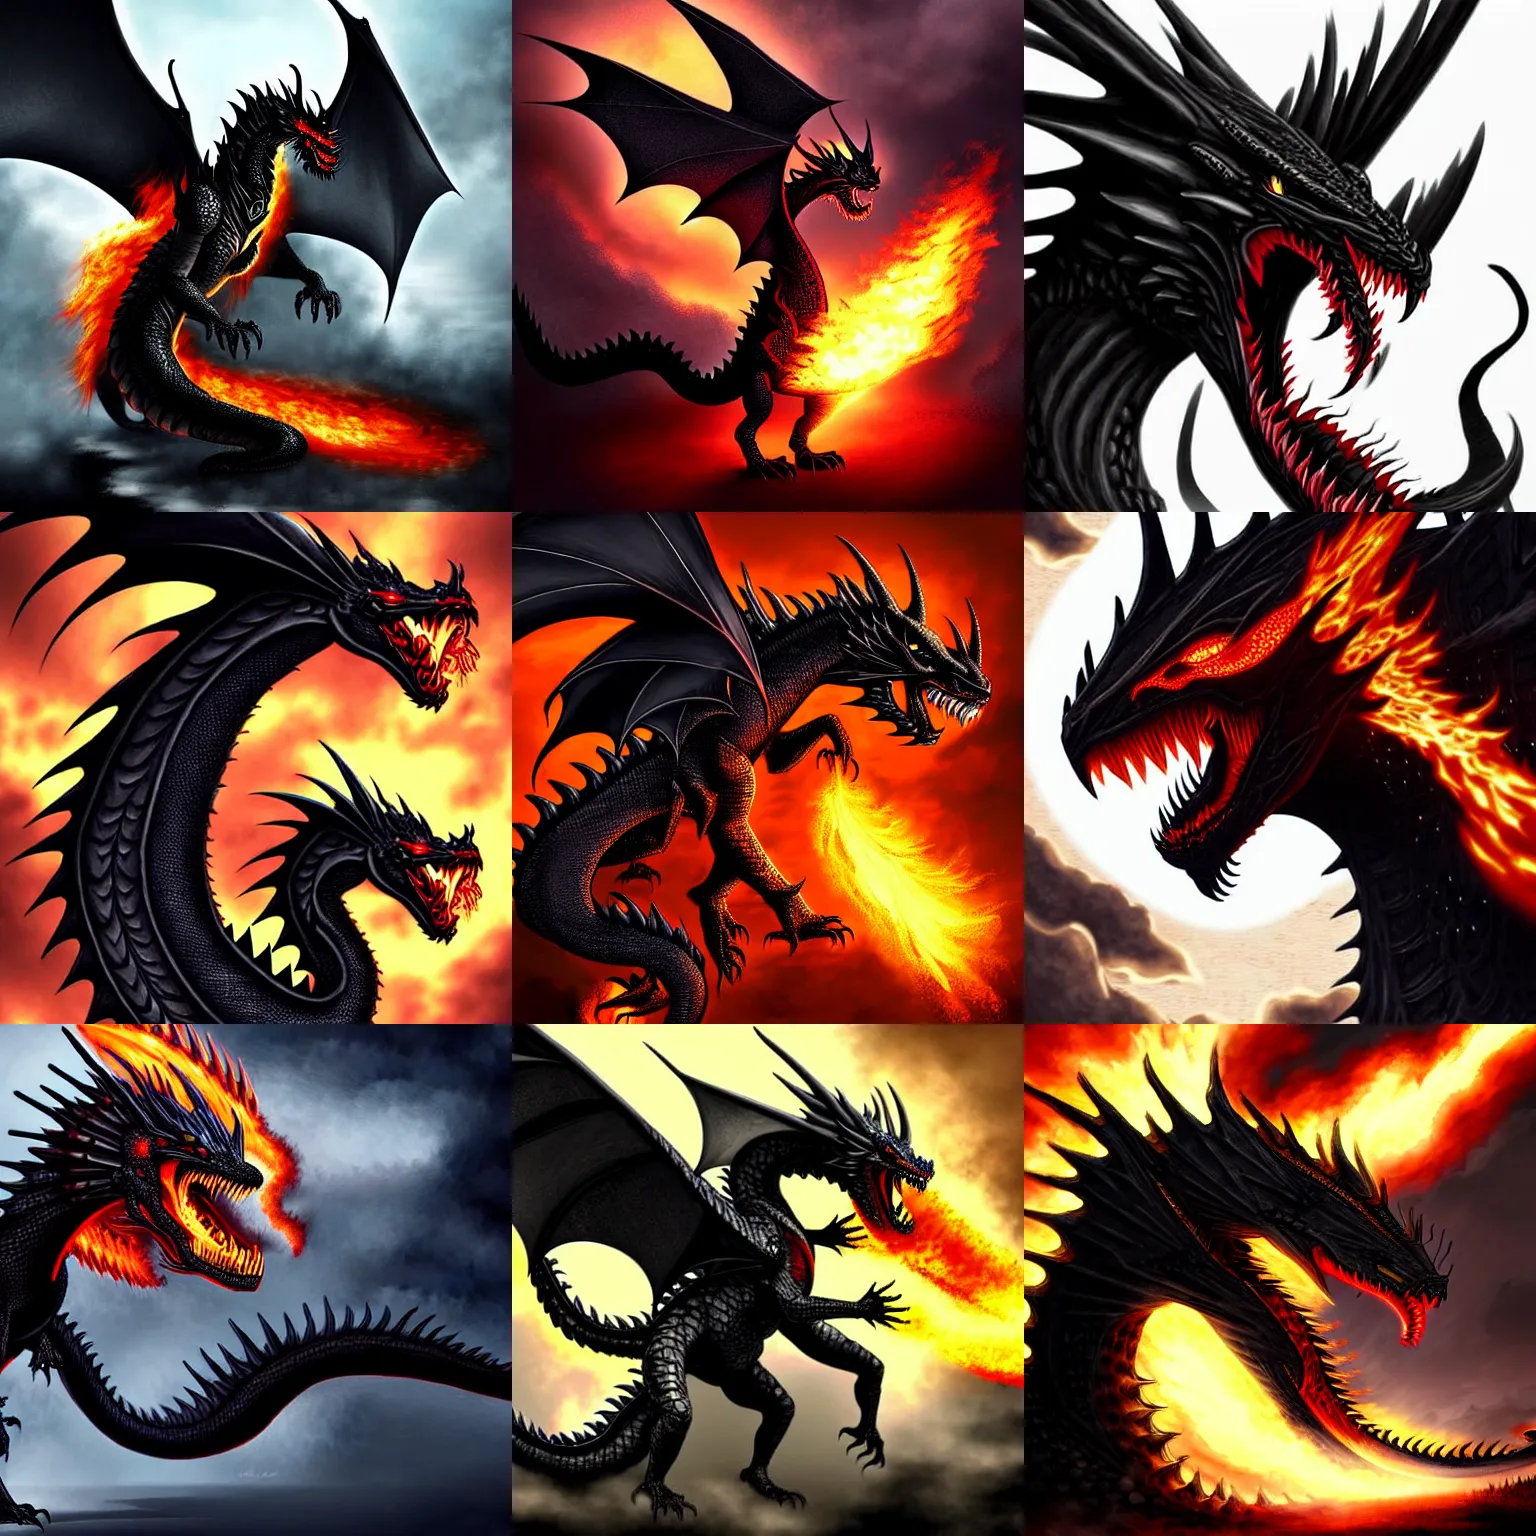 Prompt: black dragon breathing fire, outstanding, epic, amazing, digital art, fantasy art